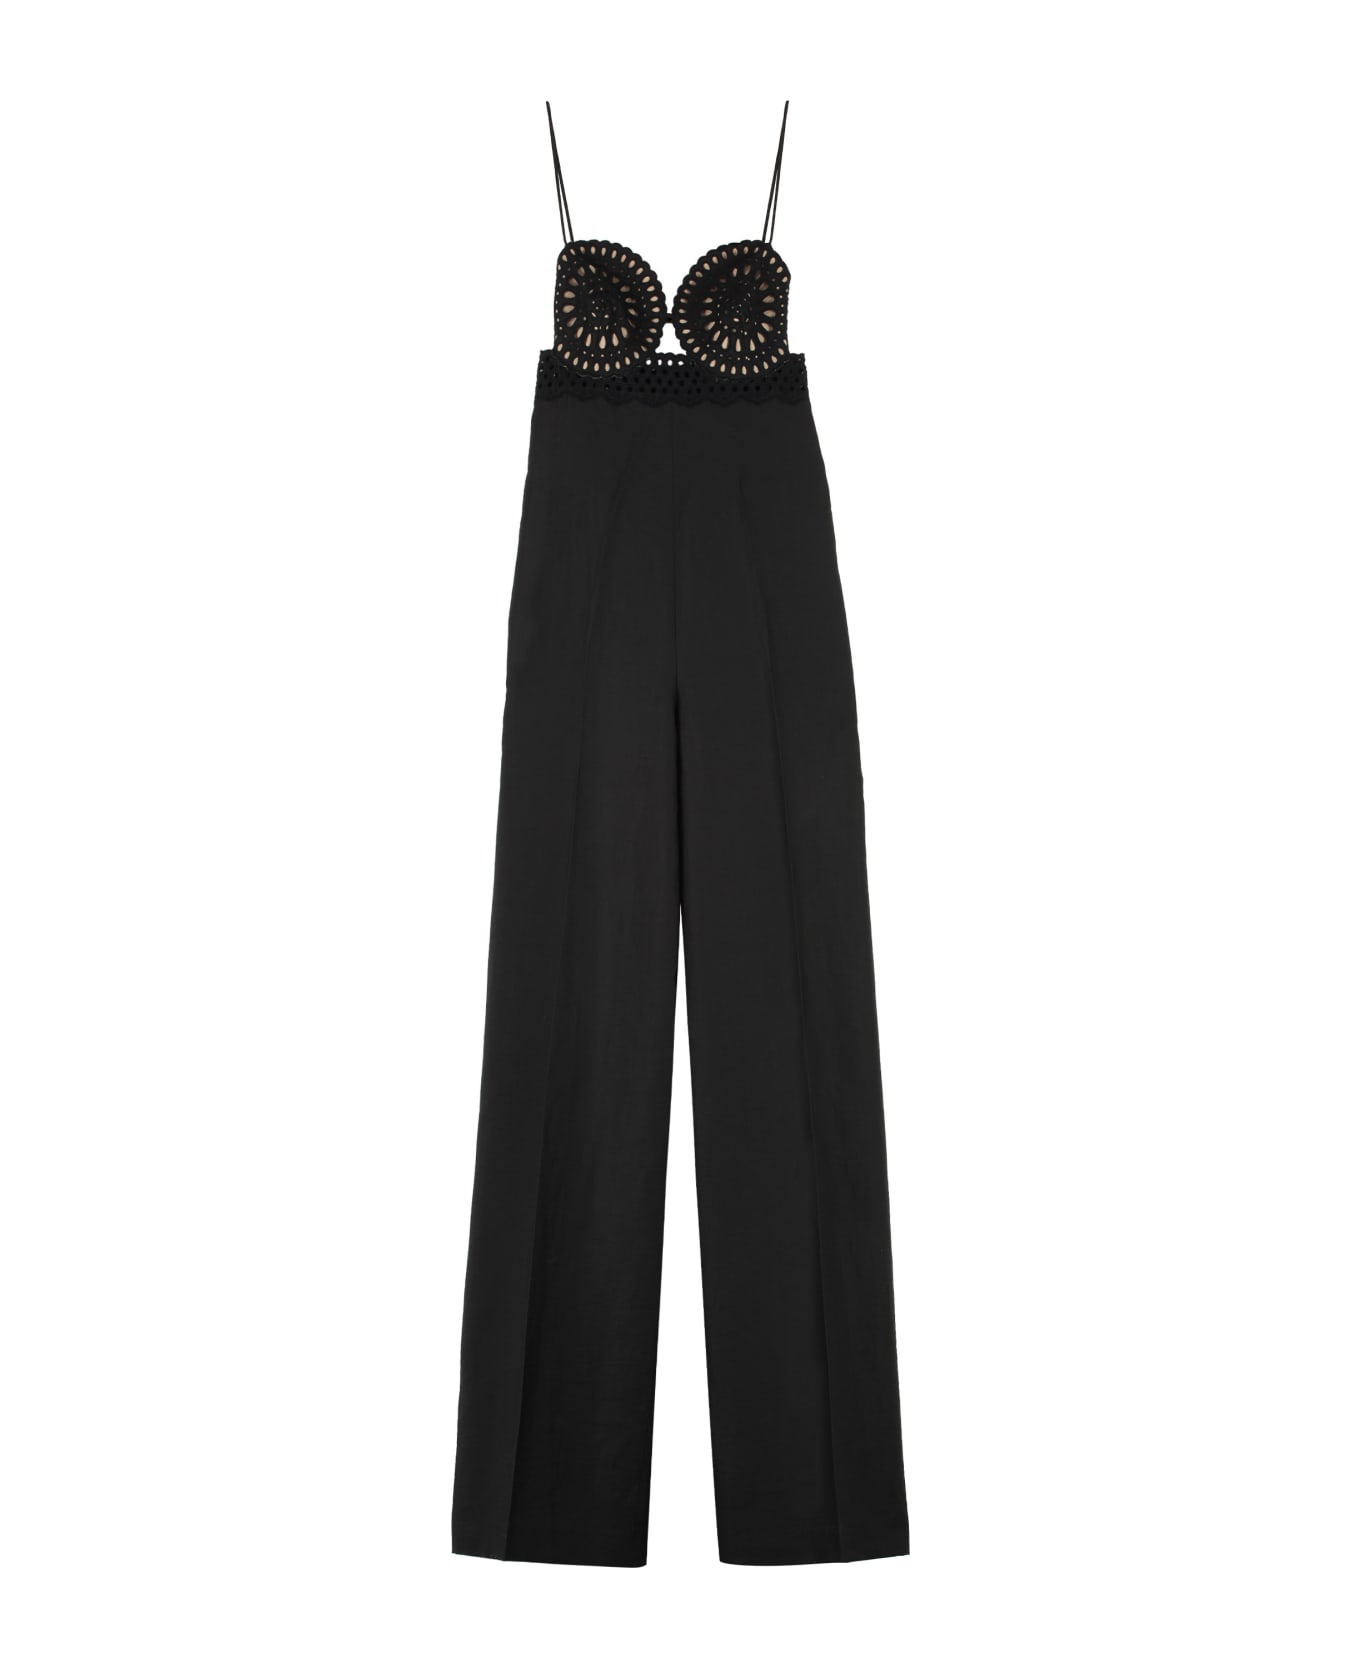 Stella McCartney Wide-leg Pants Jumpsuit - black ジャンプスーツ